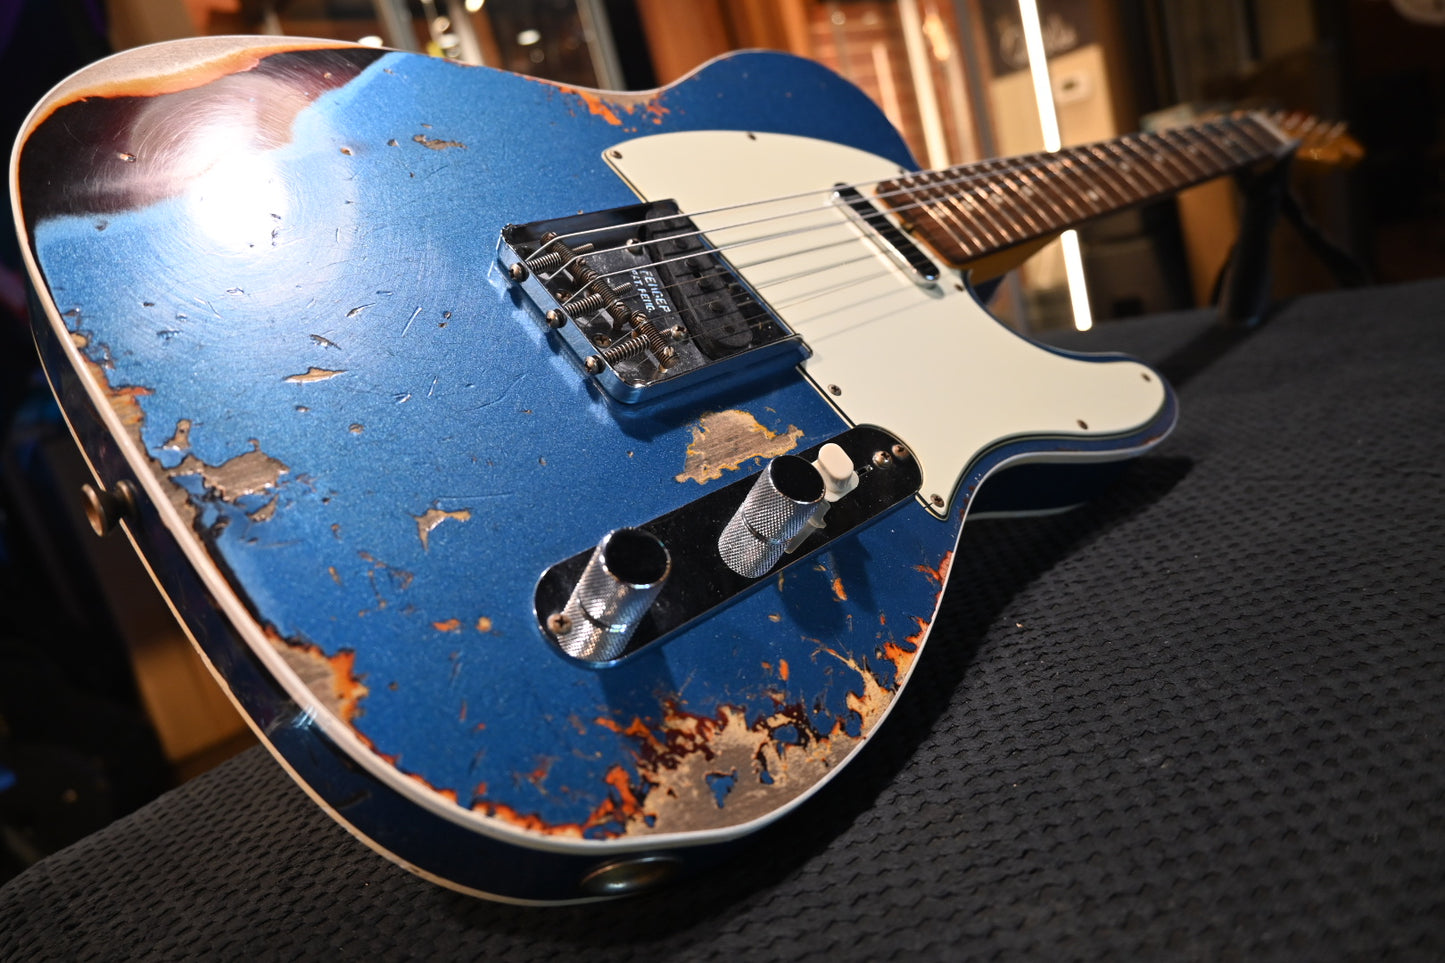 Fender Custom Shop 1960 Telecaster Relic 2021 - Aged Lake Placid Blue over 3-Tone Sunburst Guitar #5145 - Danville Music